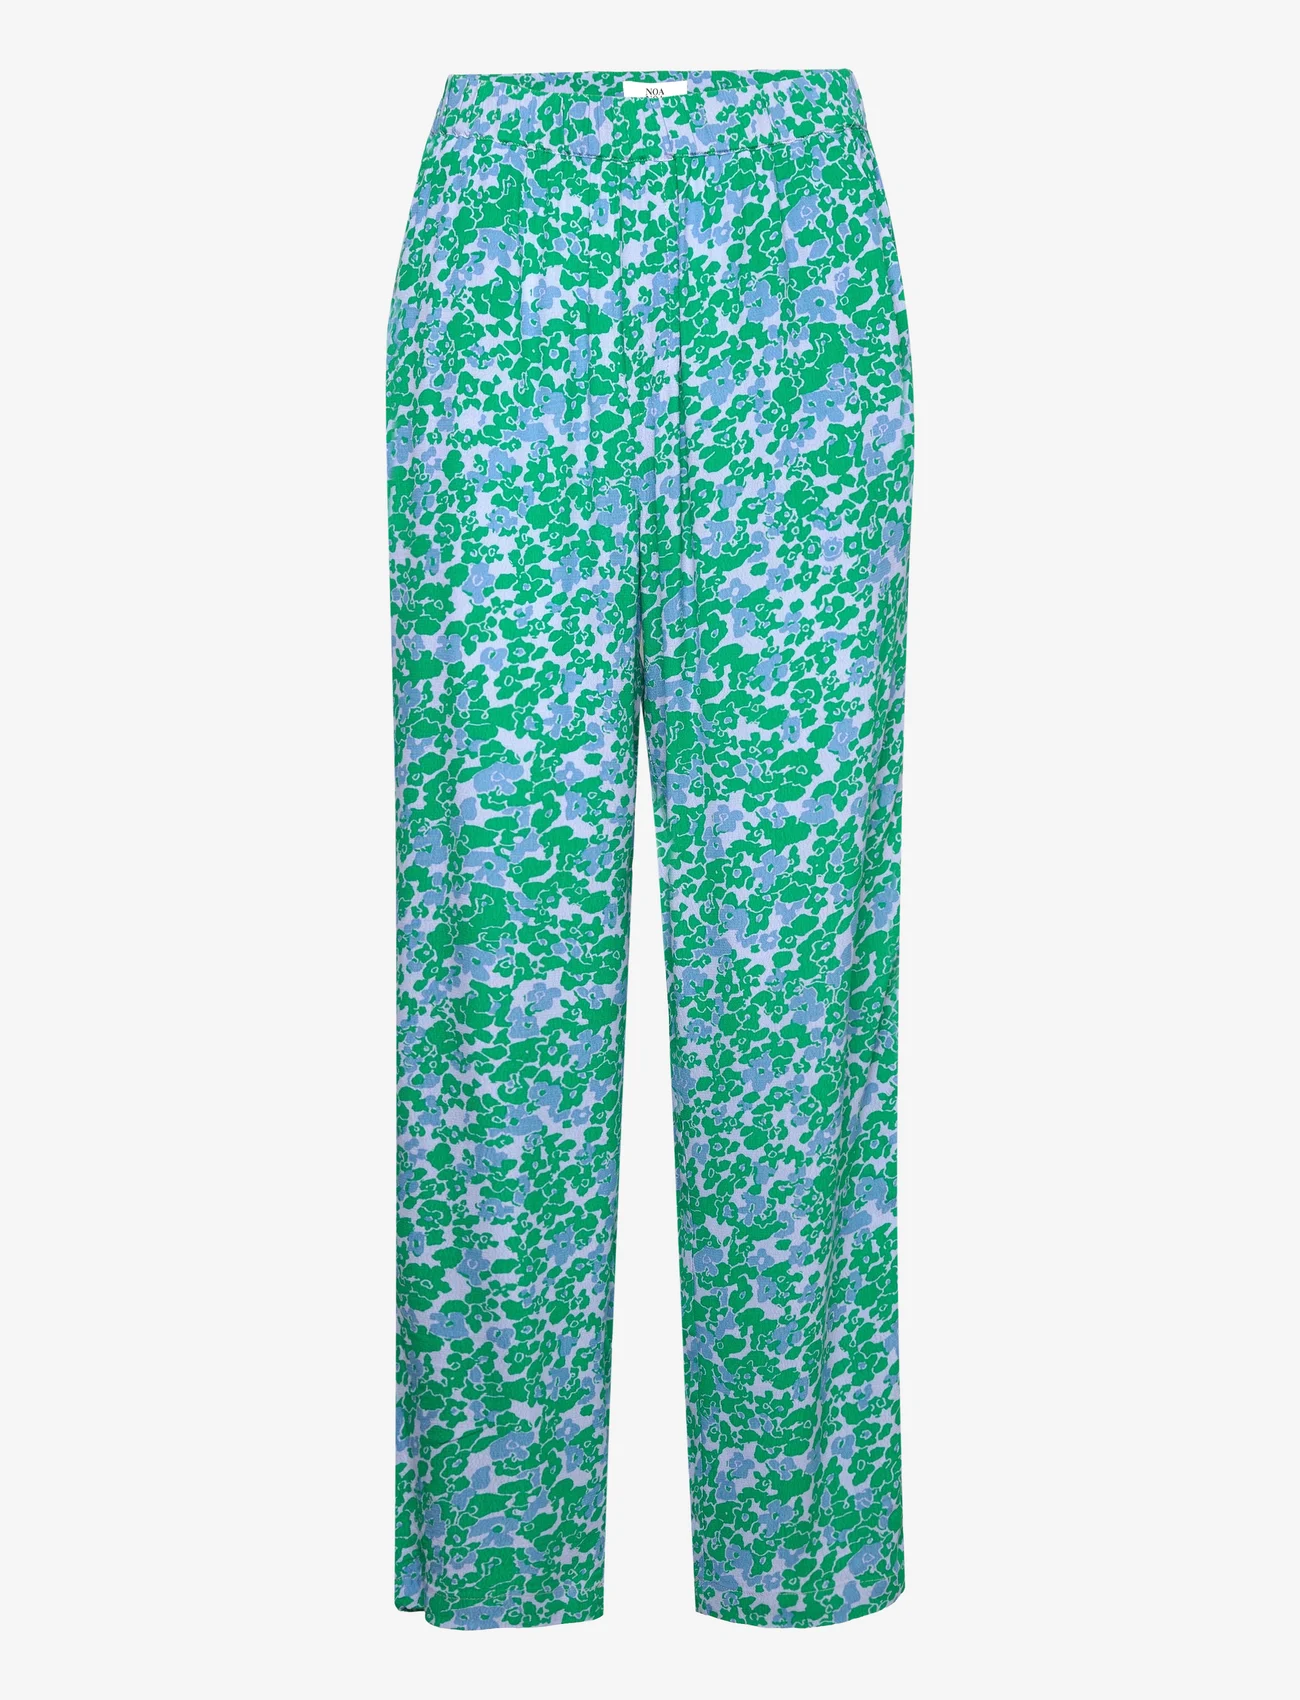 Noa Noa - BellaNN Trousers - rette bukser - print blue/green - 0